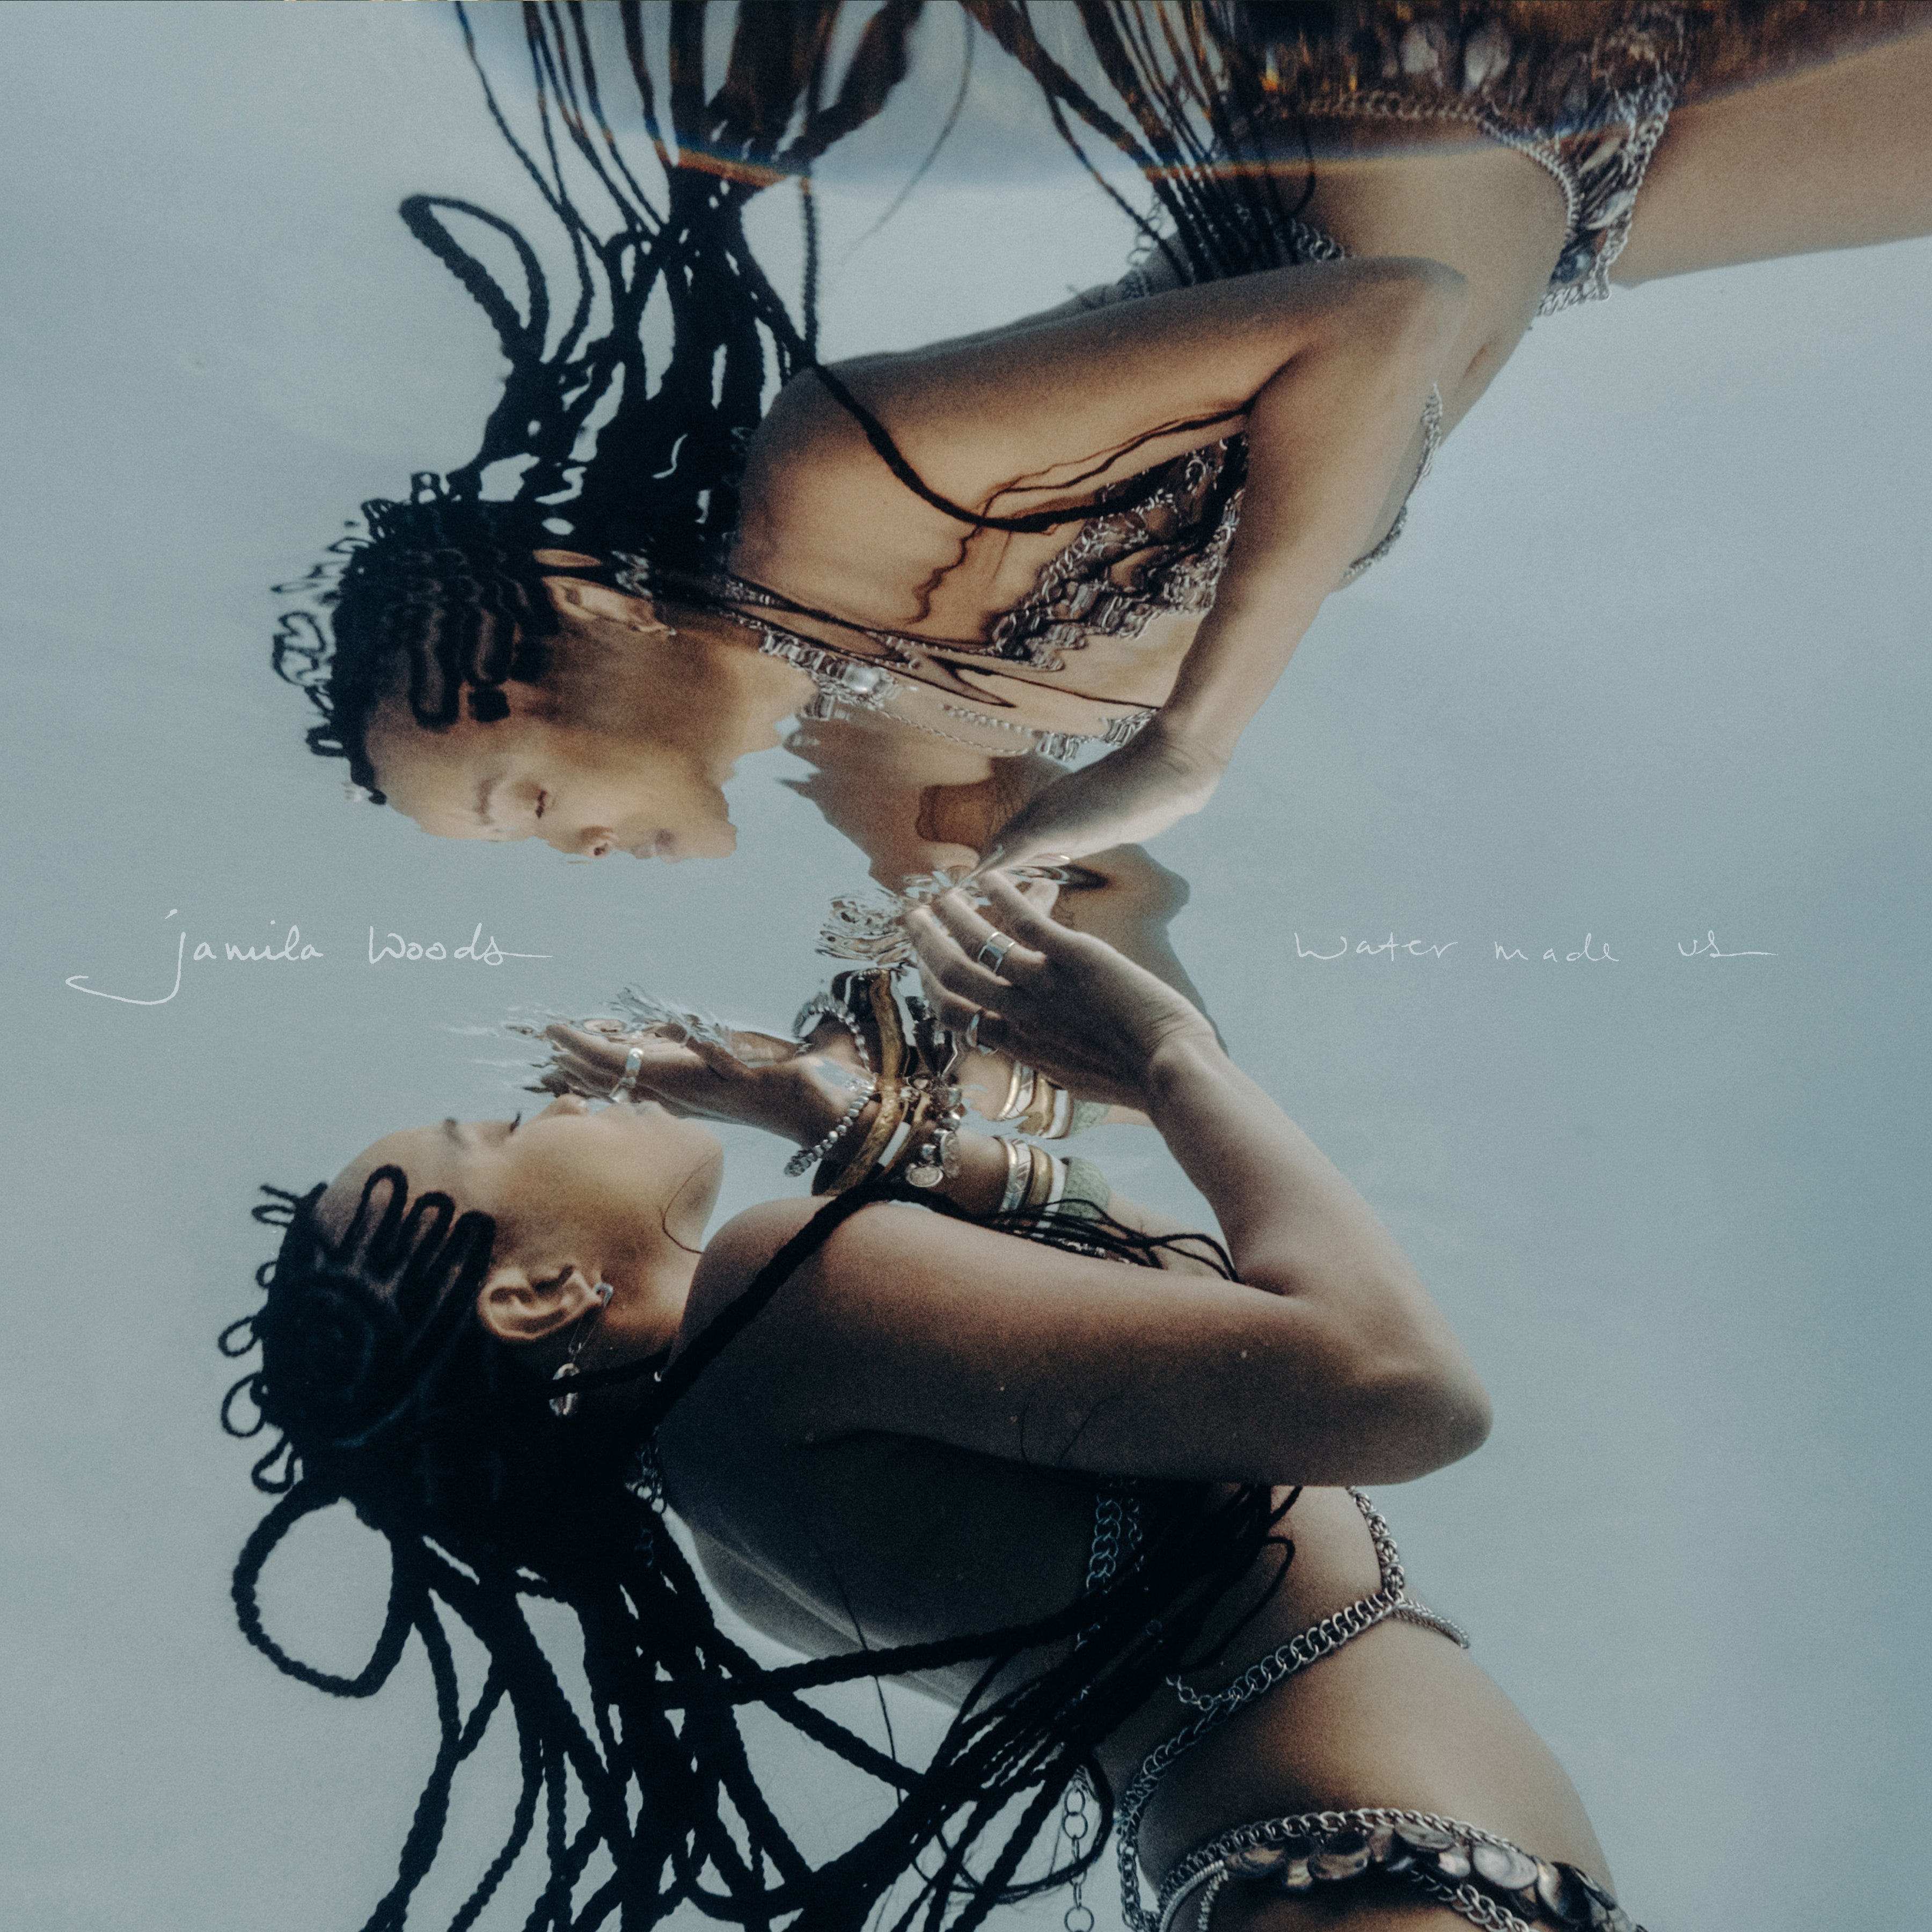 [DAMAGED] Jamila Woods - Water Made Us [Arctic Swirl Vinyl]